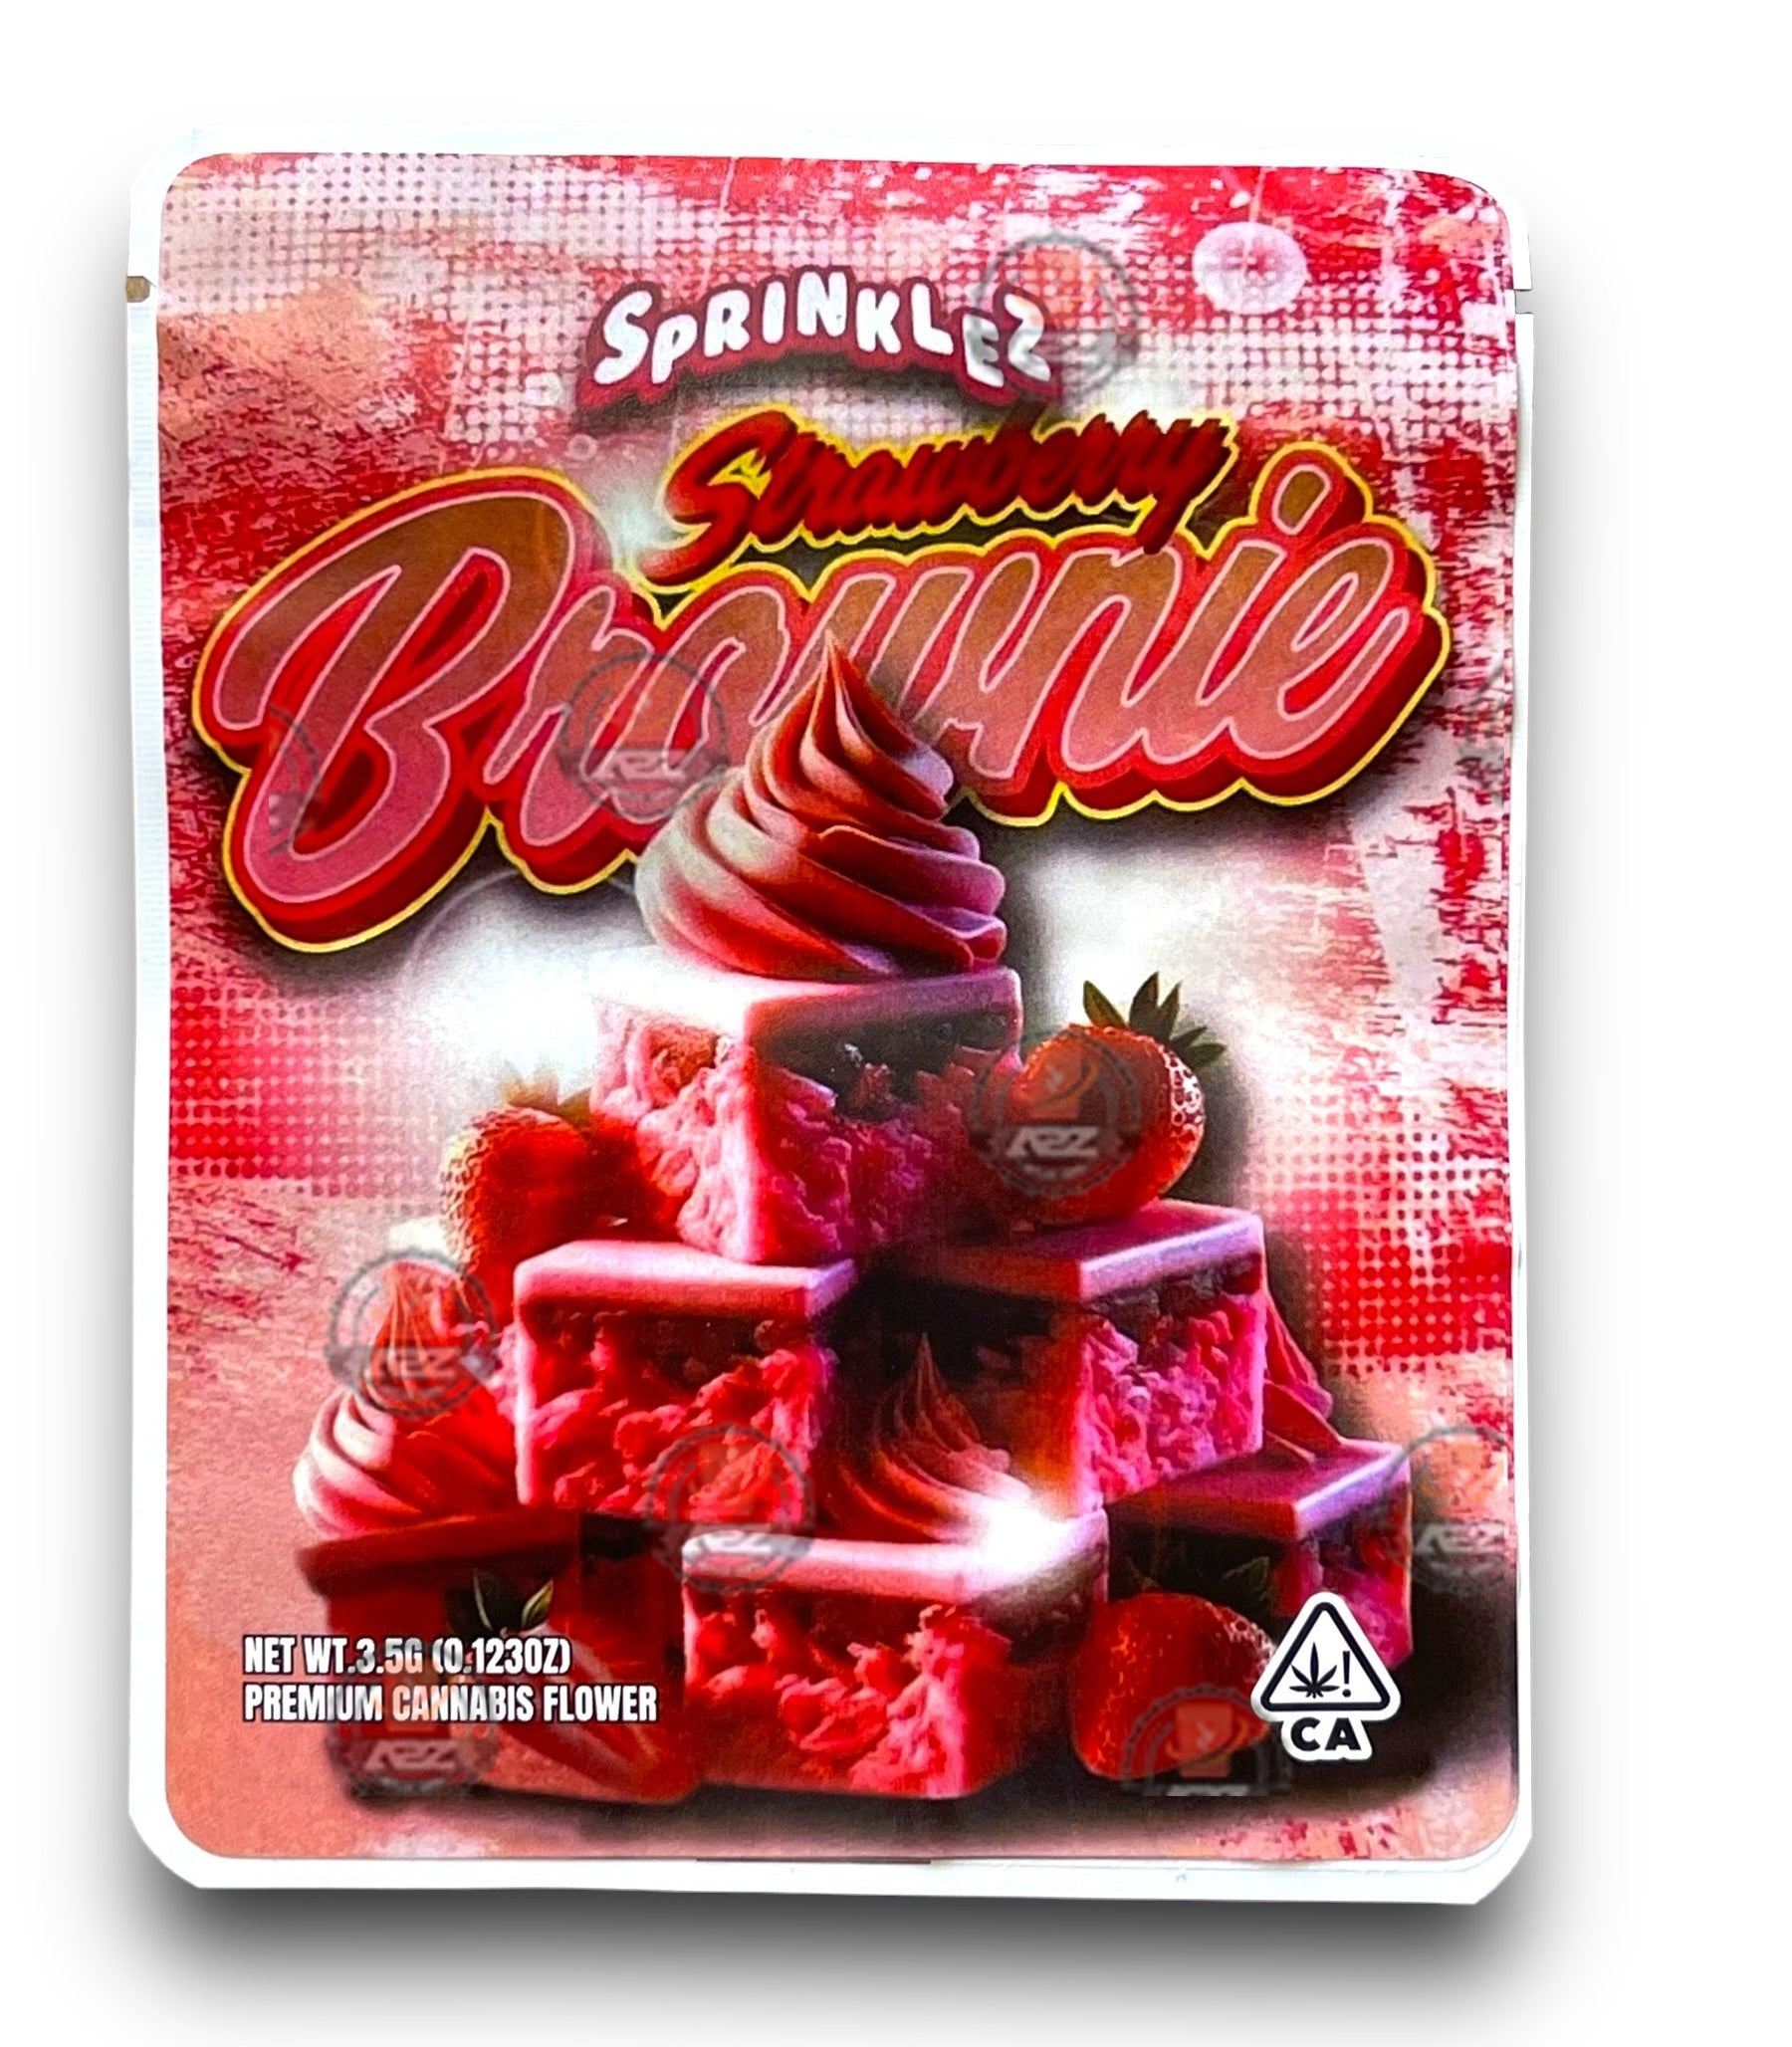 Sprinklez Strawberry Brownie 3.5G Mylar Bags -With stickers and label